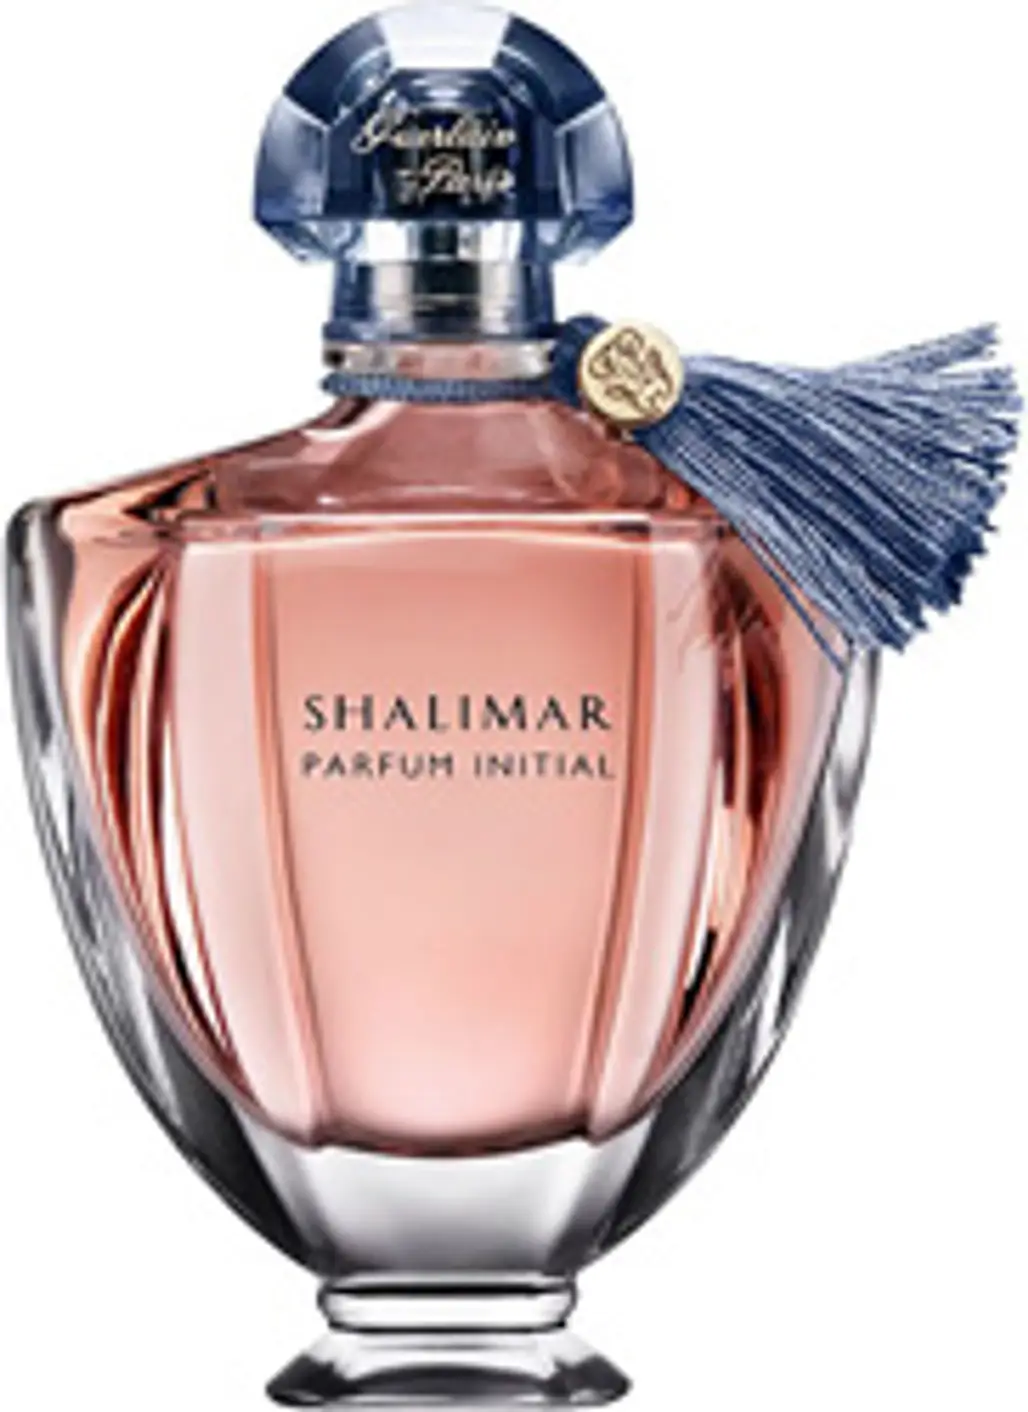 Guerlain ‘Shalimar Parfum Initial’ Perfume